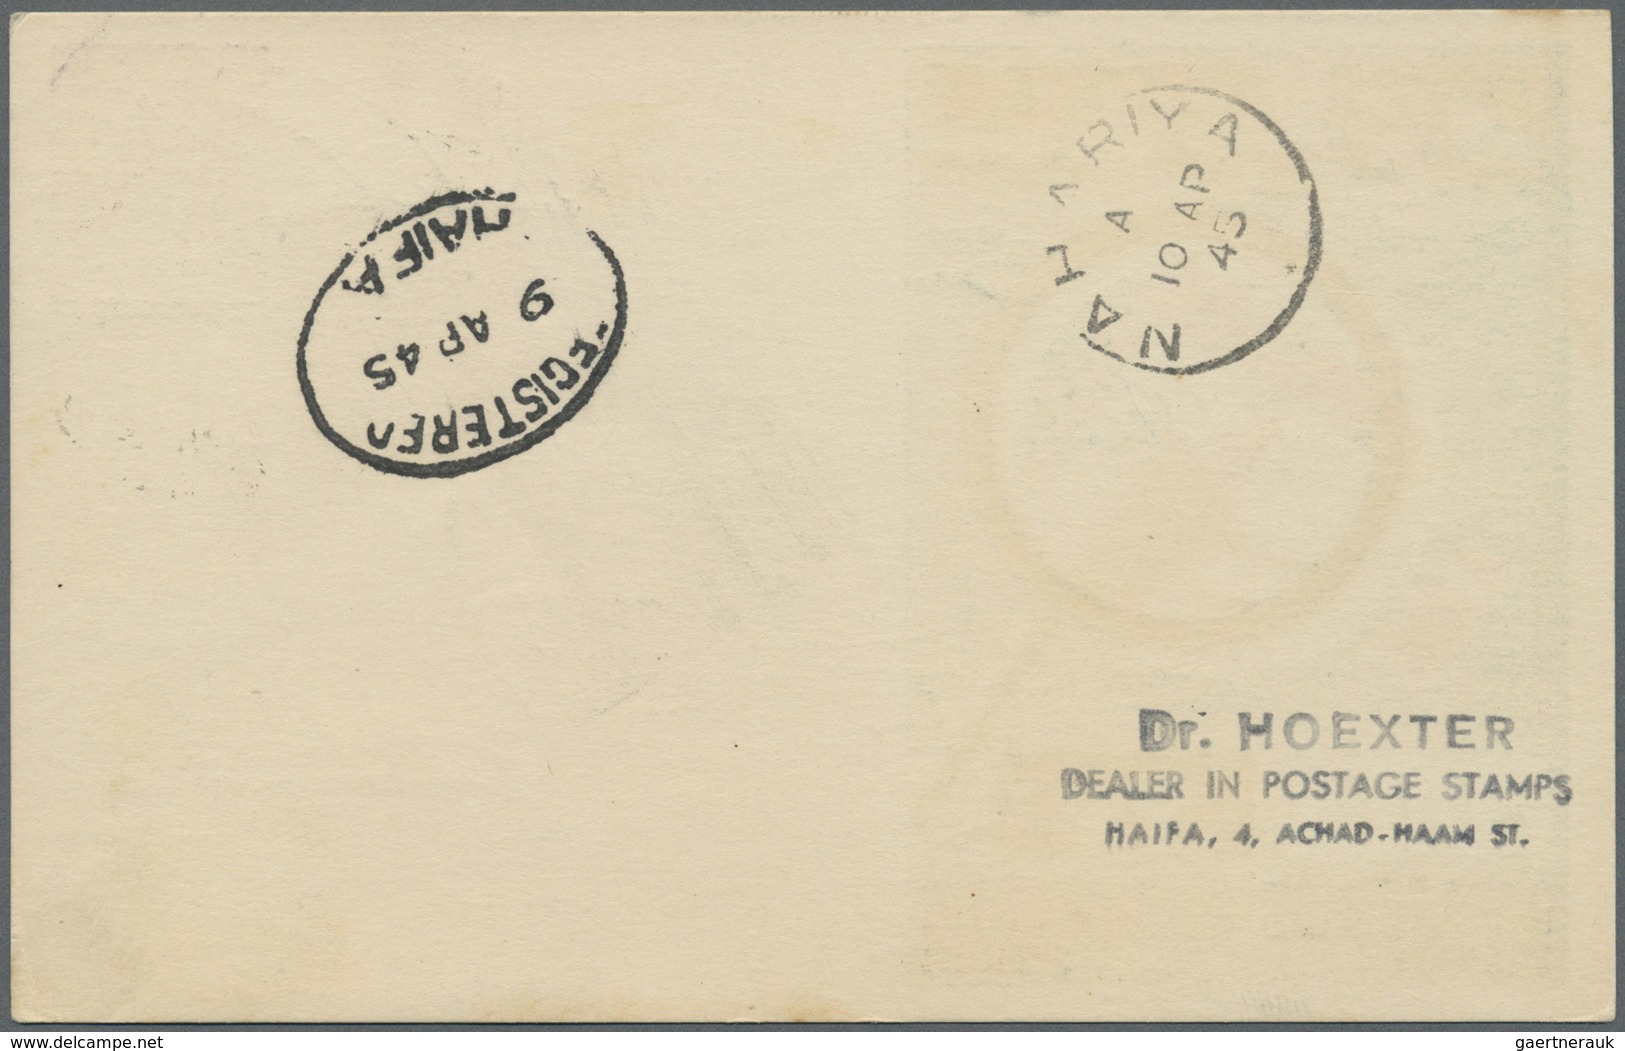 GA Palästina: 1945, Tel Aviv philatellic exhibiton stationery cards used (6): air mail registered to Lo